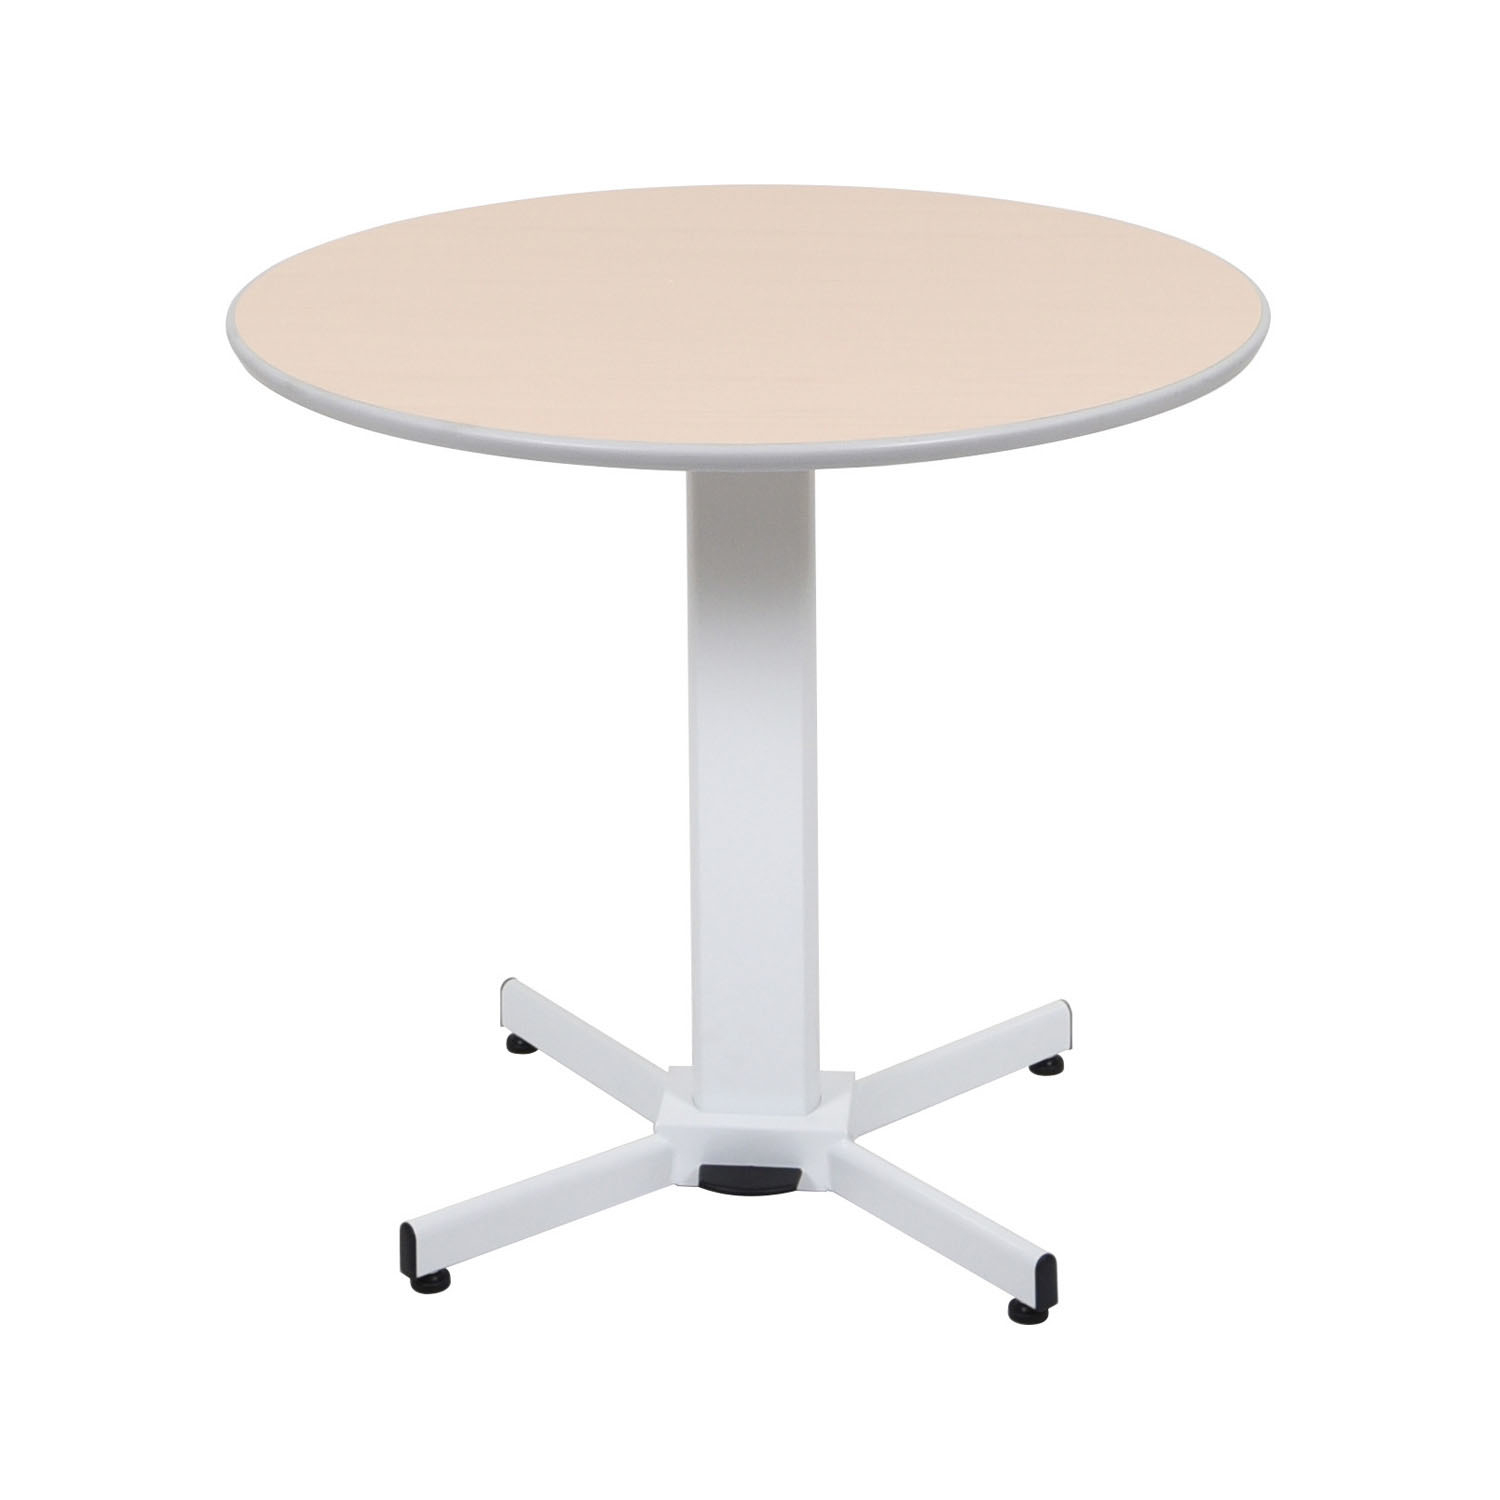 Luxor Pneumatic Adjustable Multi-functional Round Pedestal Table